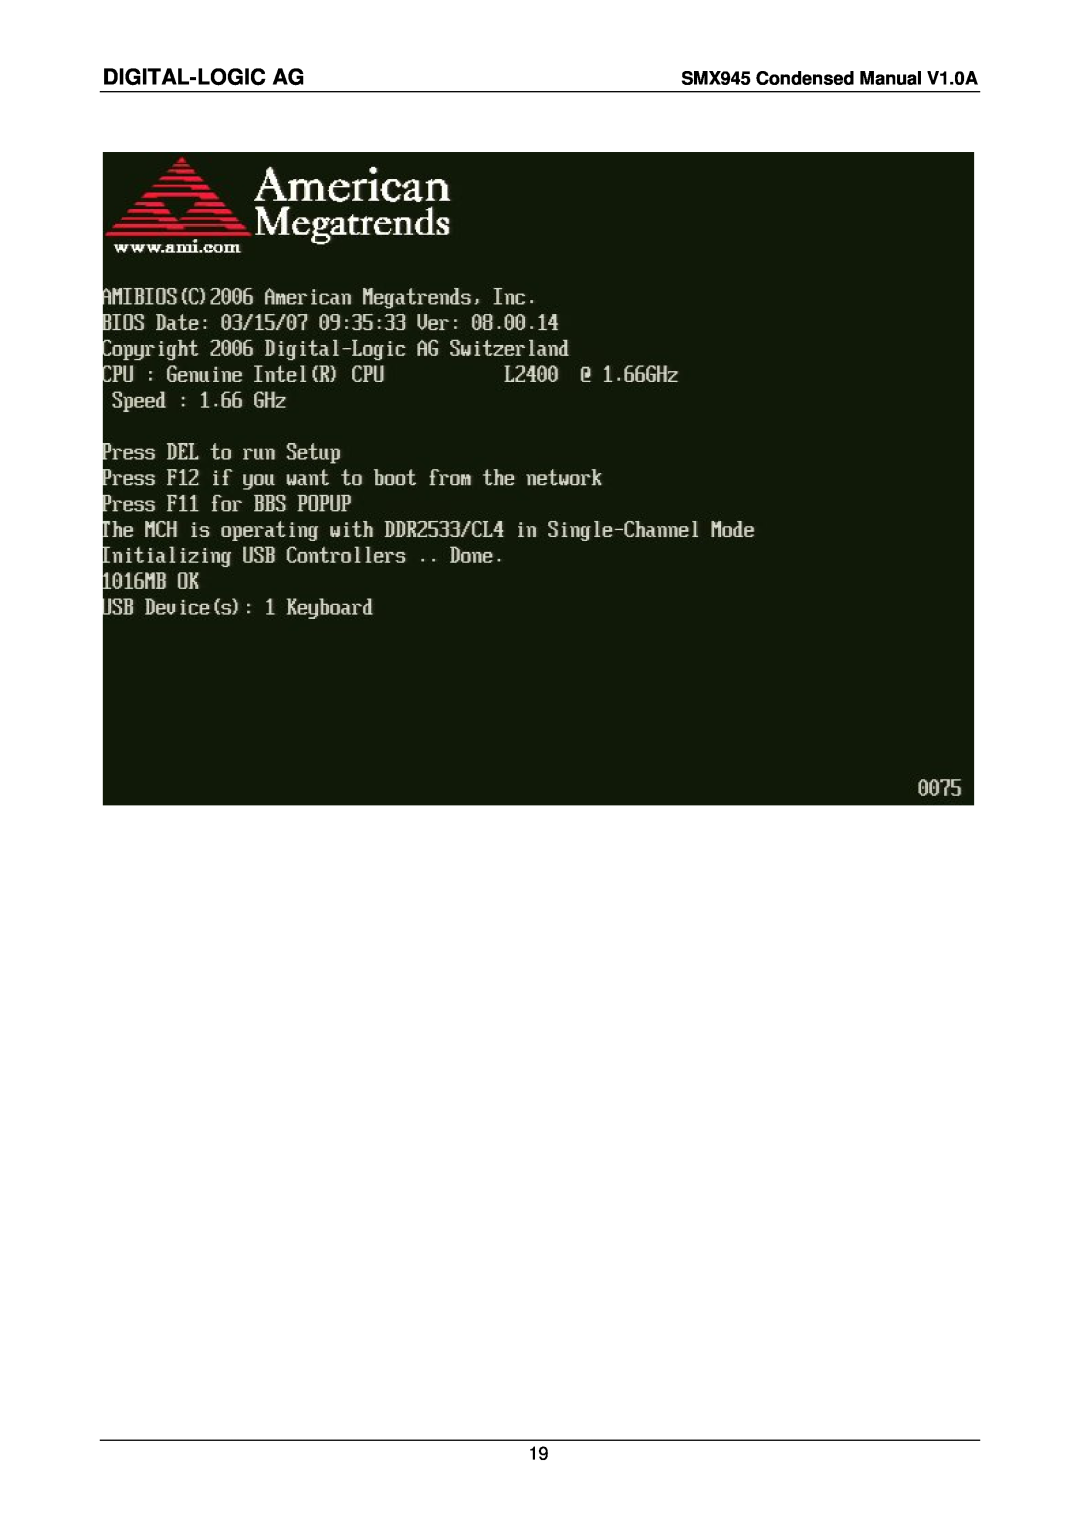 Compaq user manual Digital-Logic Ag, SMX945 Condensed Manual V1.0A 